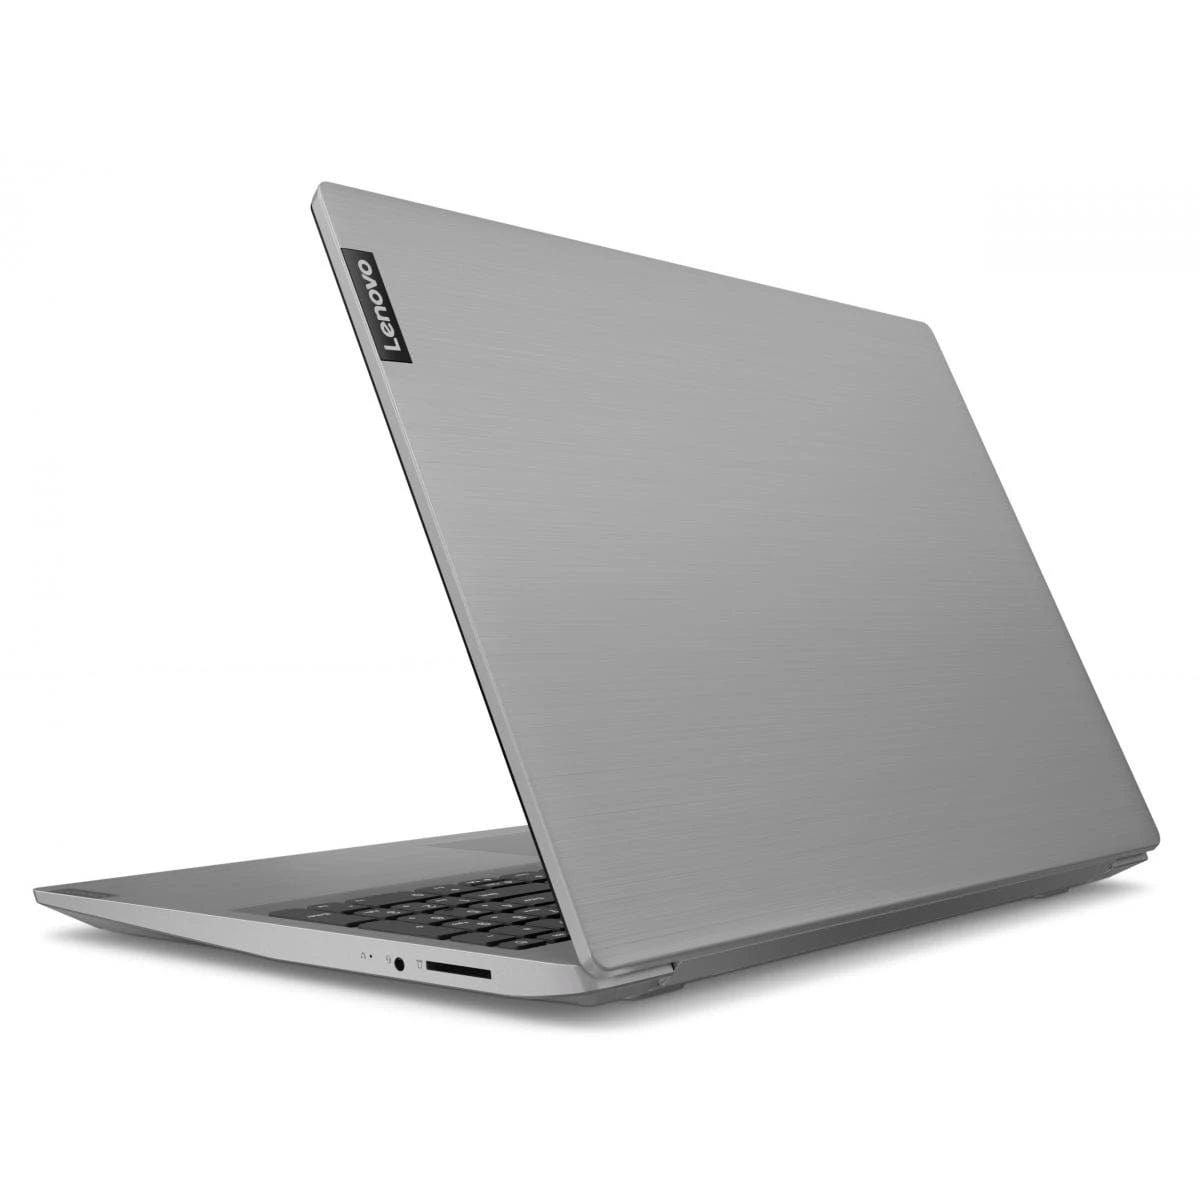 LENOVO Laptops Lenovo IdeaPad 3 NEW 11Gen Intel Core i5 4-Cores w/ SSD & Full HD Display - Arctic Grey